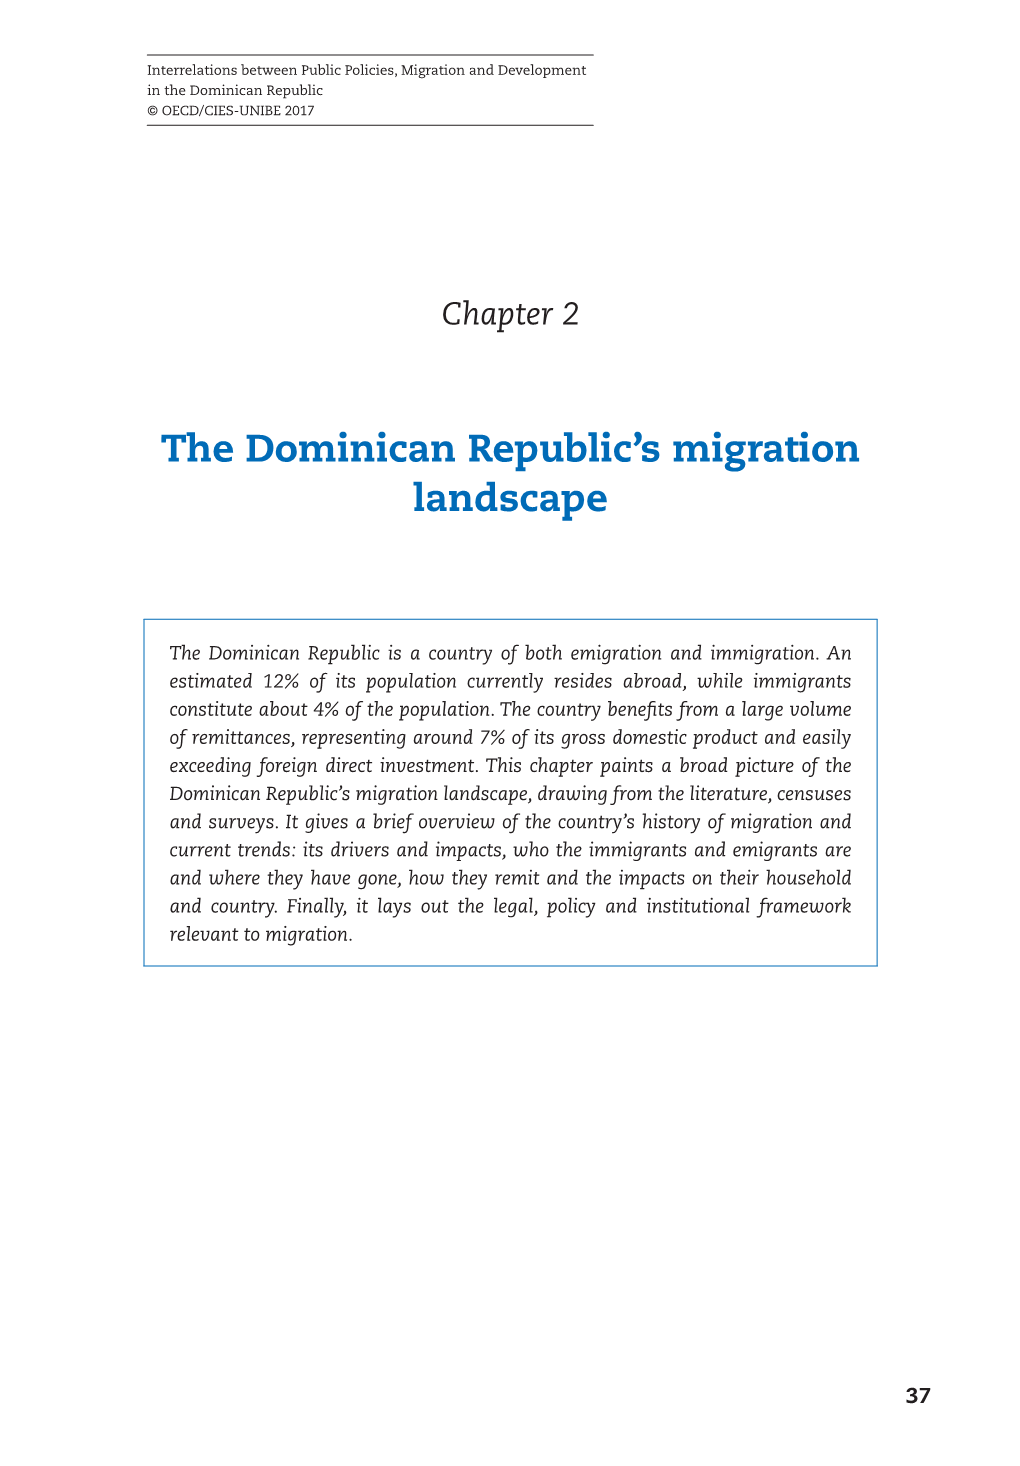 The Dominican Republic's Migration Landscape”, in Interrelations Between Public Policies, Migration and Development in the Dominican Republic, OECD Publishing, Paris